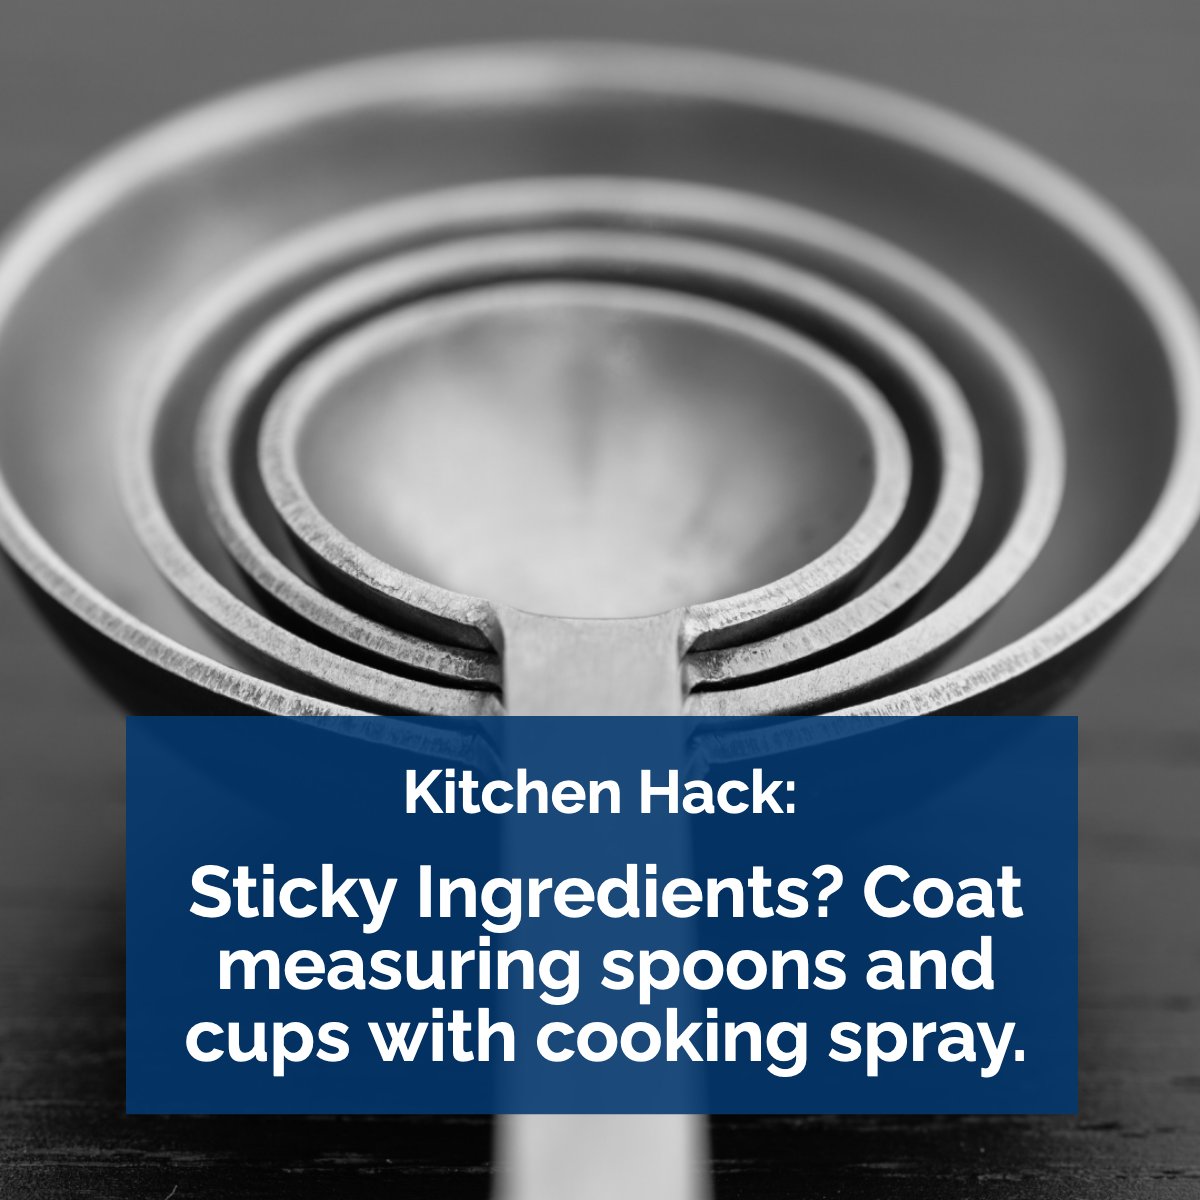 Kitchen Hack:

Share yours too... 🍽️🍳

#didyouknow #hack #kitchenhack #kitchen #goodtoknow #randomfact